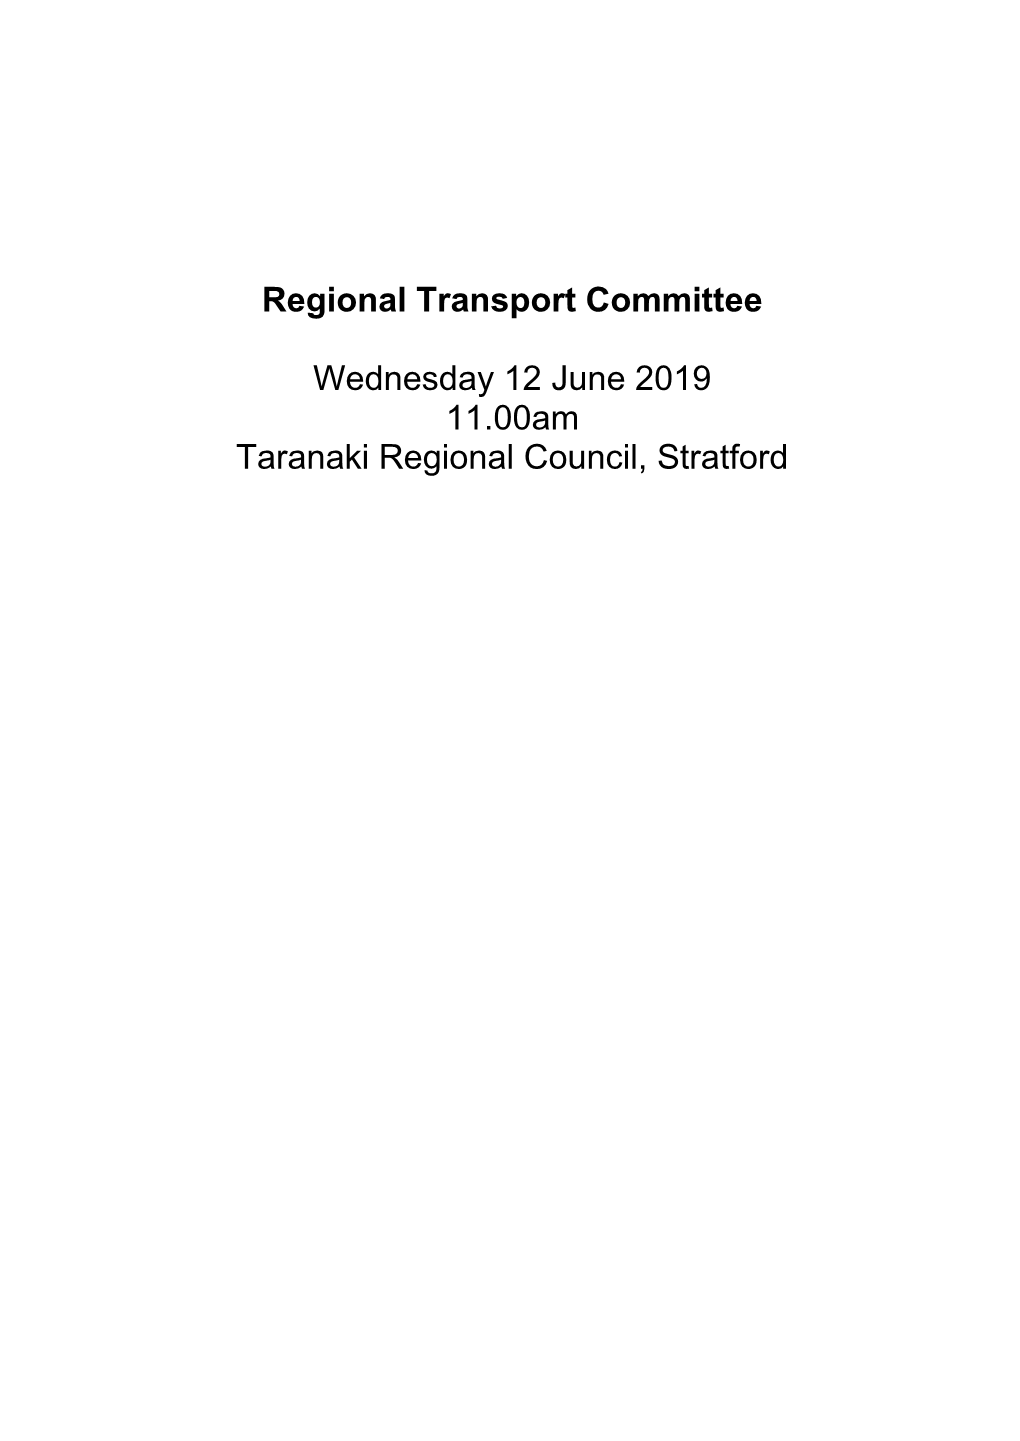 Regional Transport Committee Agenda June 2019